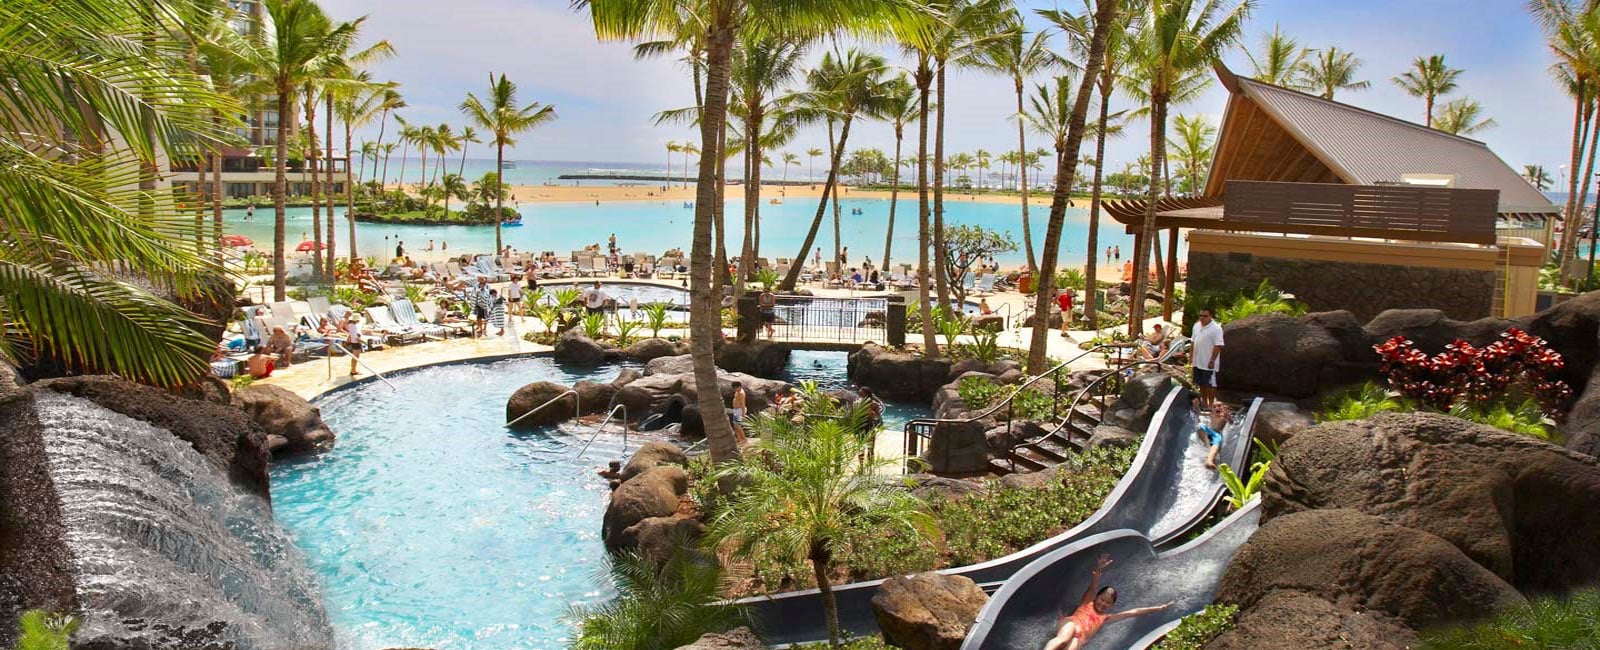 Pool Area of the Kalia Suites in Honolulu, Hawaii